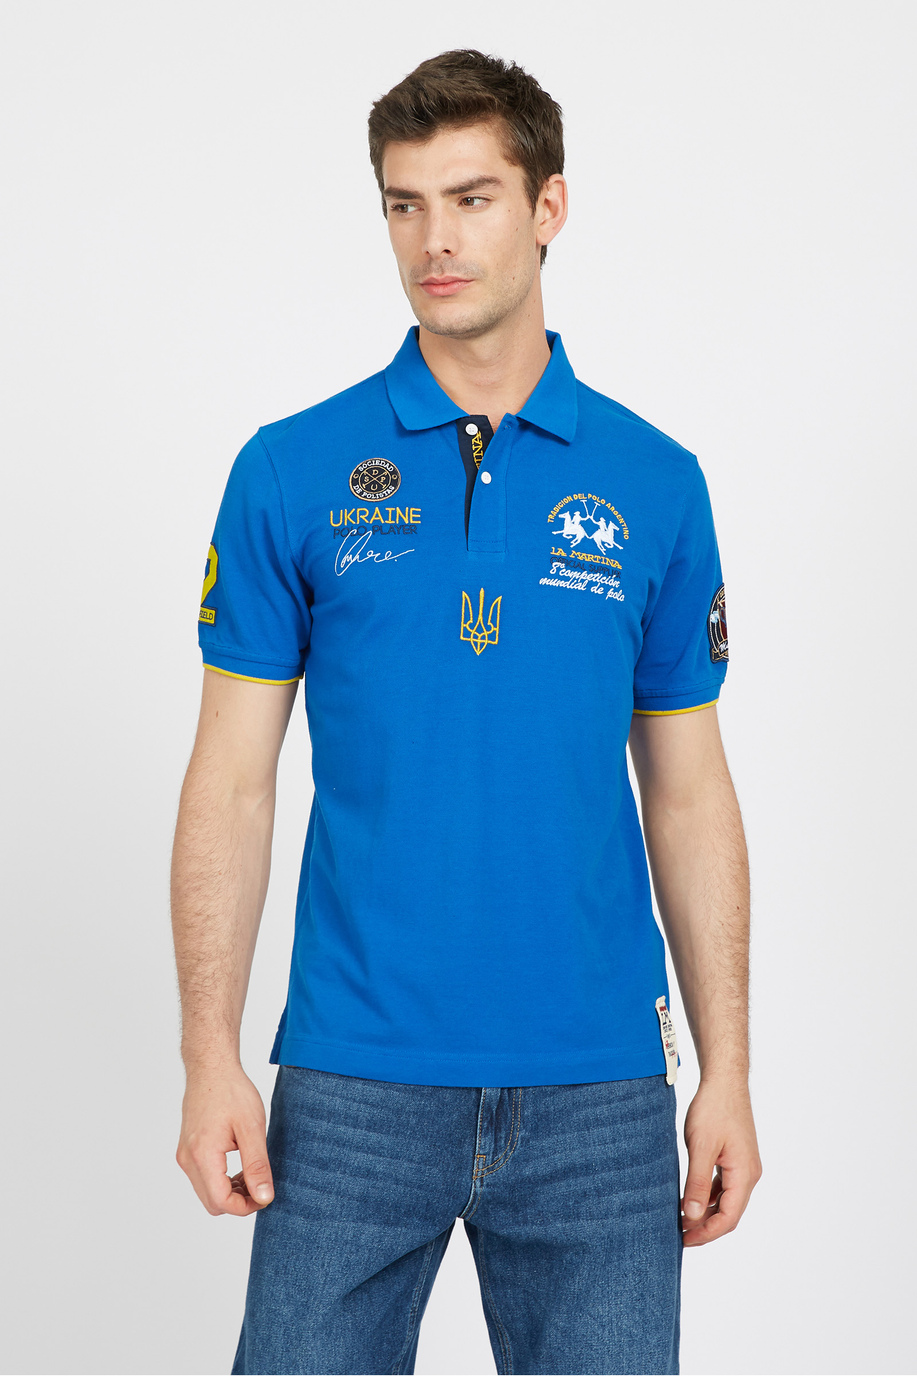 Regular fit 100% cotton short-sleeved polo shirt for men - Vincenzo - Inmortales | La Martina - Official Online Shop